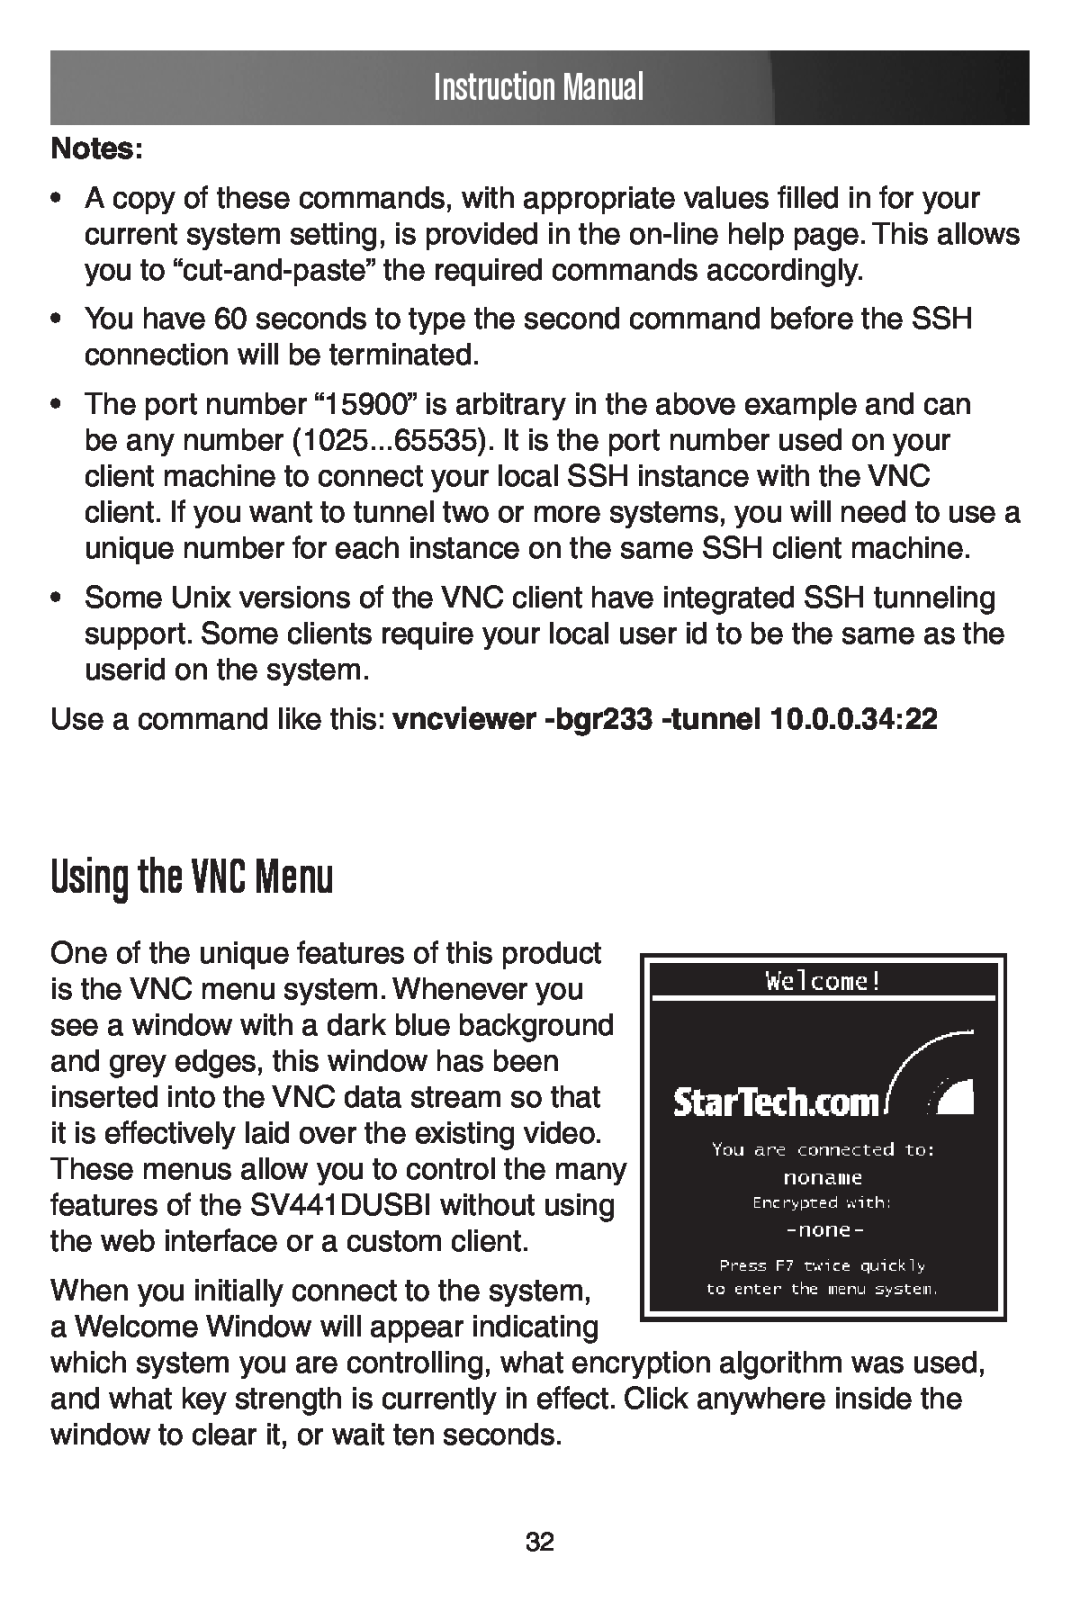 StarTech.com SV441DUSBI Using the VNC Menu, Use a command like this vncviewer -bgr233 -tunnel, Instruction Manual 